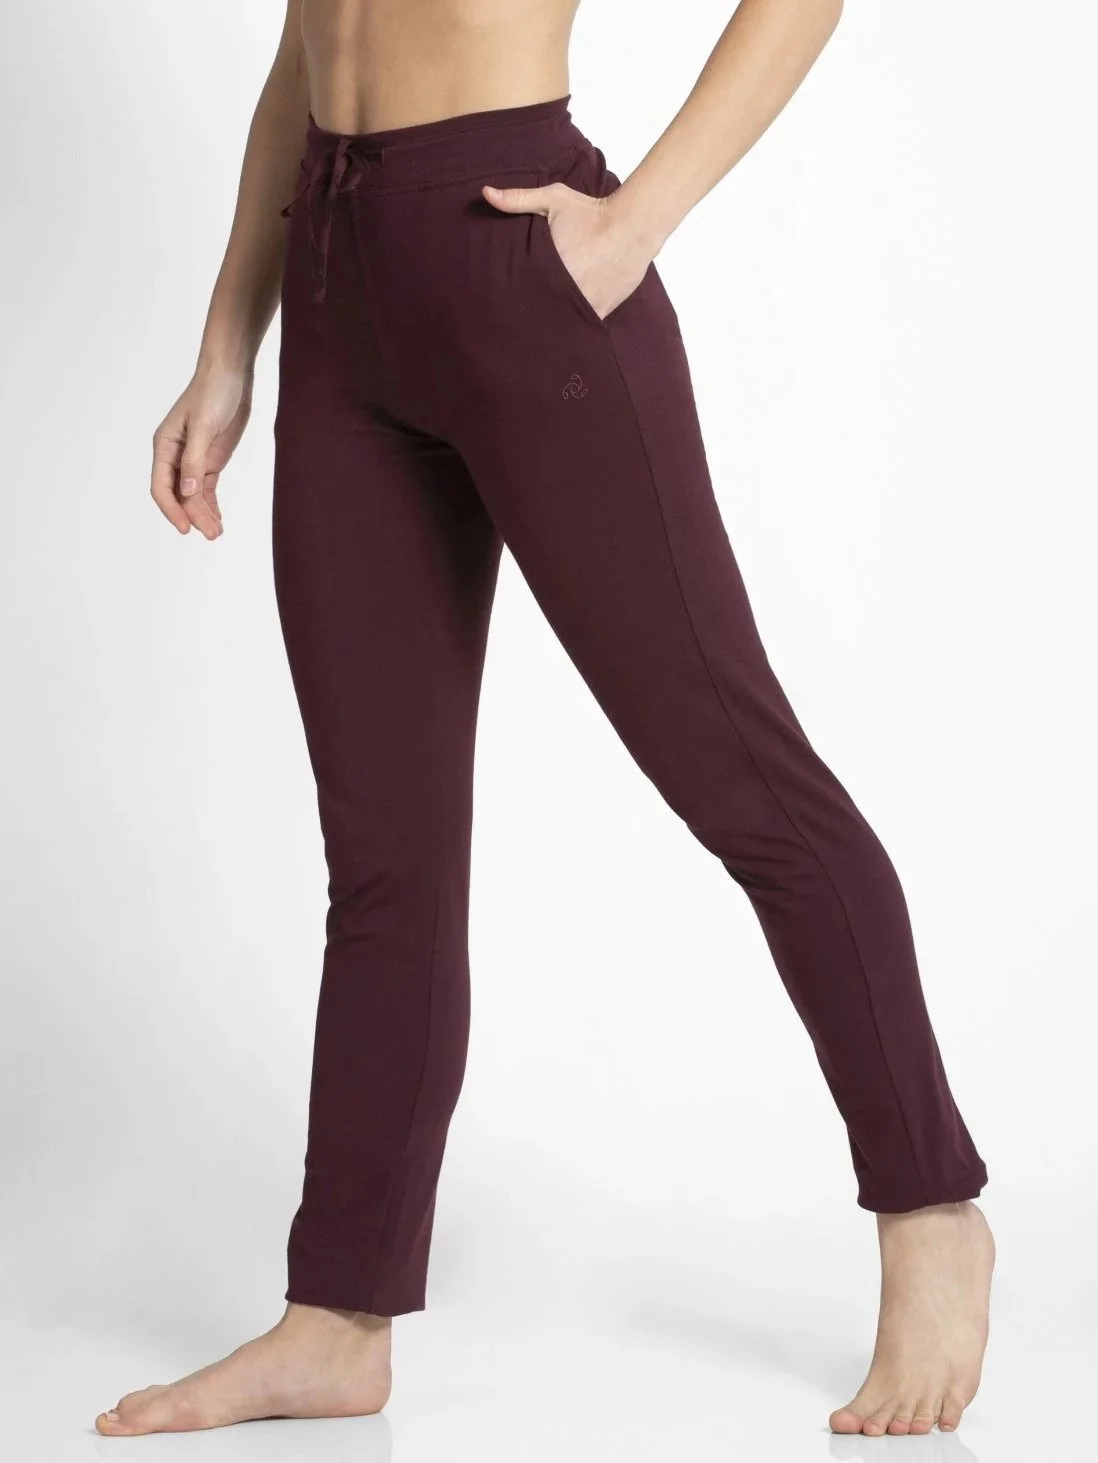 Buy Jockey Women Regular fit Cotton Solid Track pants - Pink Online |Paytm  Mall